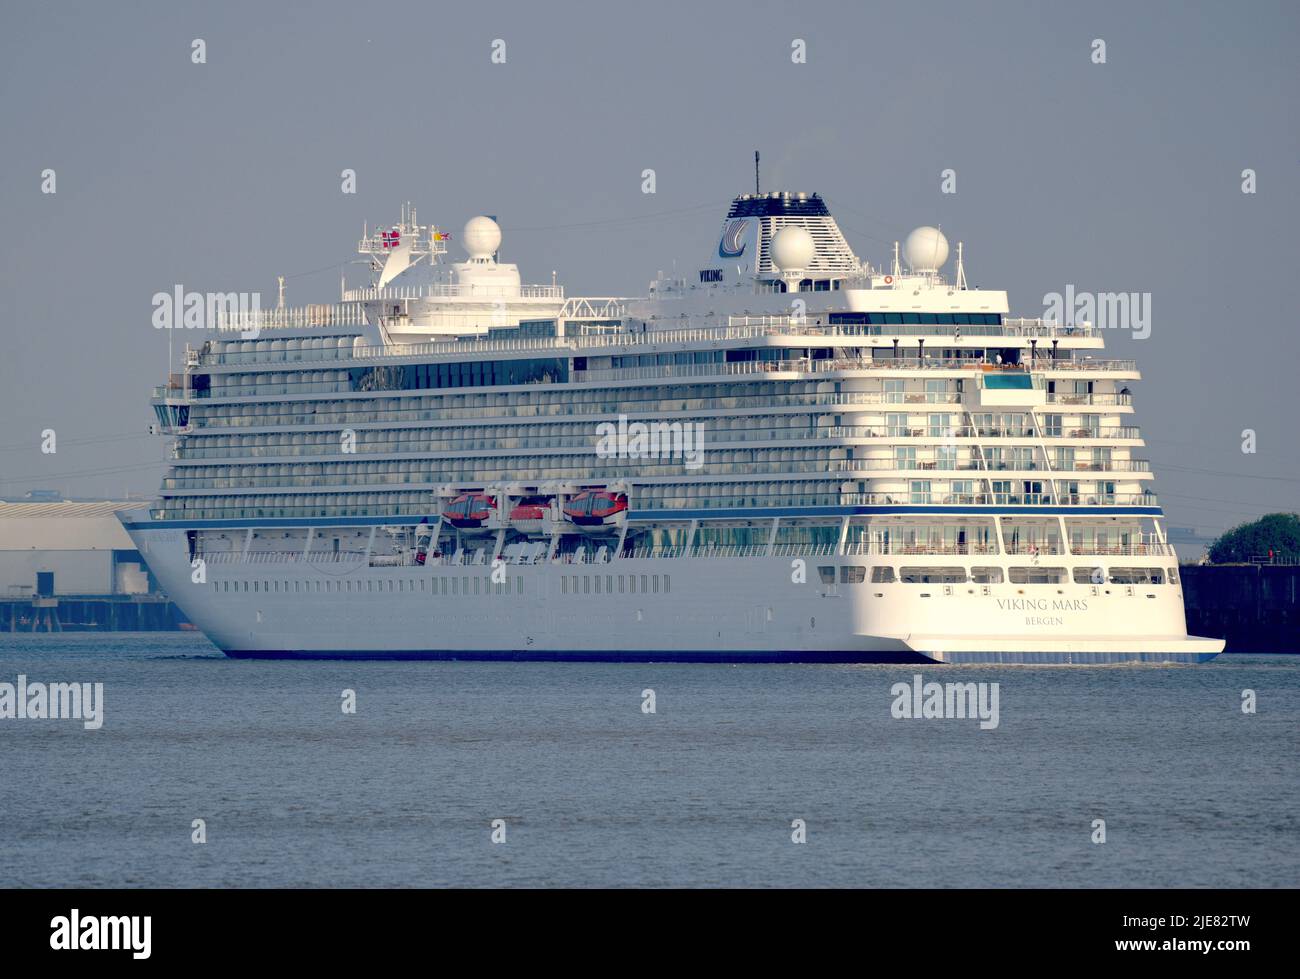 24/06/2022 Tilbury UK The cruise ship Viking Mars makes her debut on the River Thames. Stock Photo